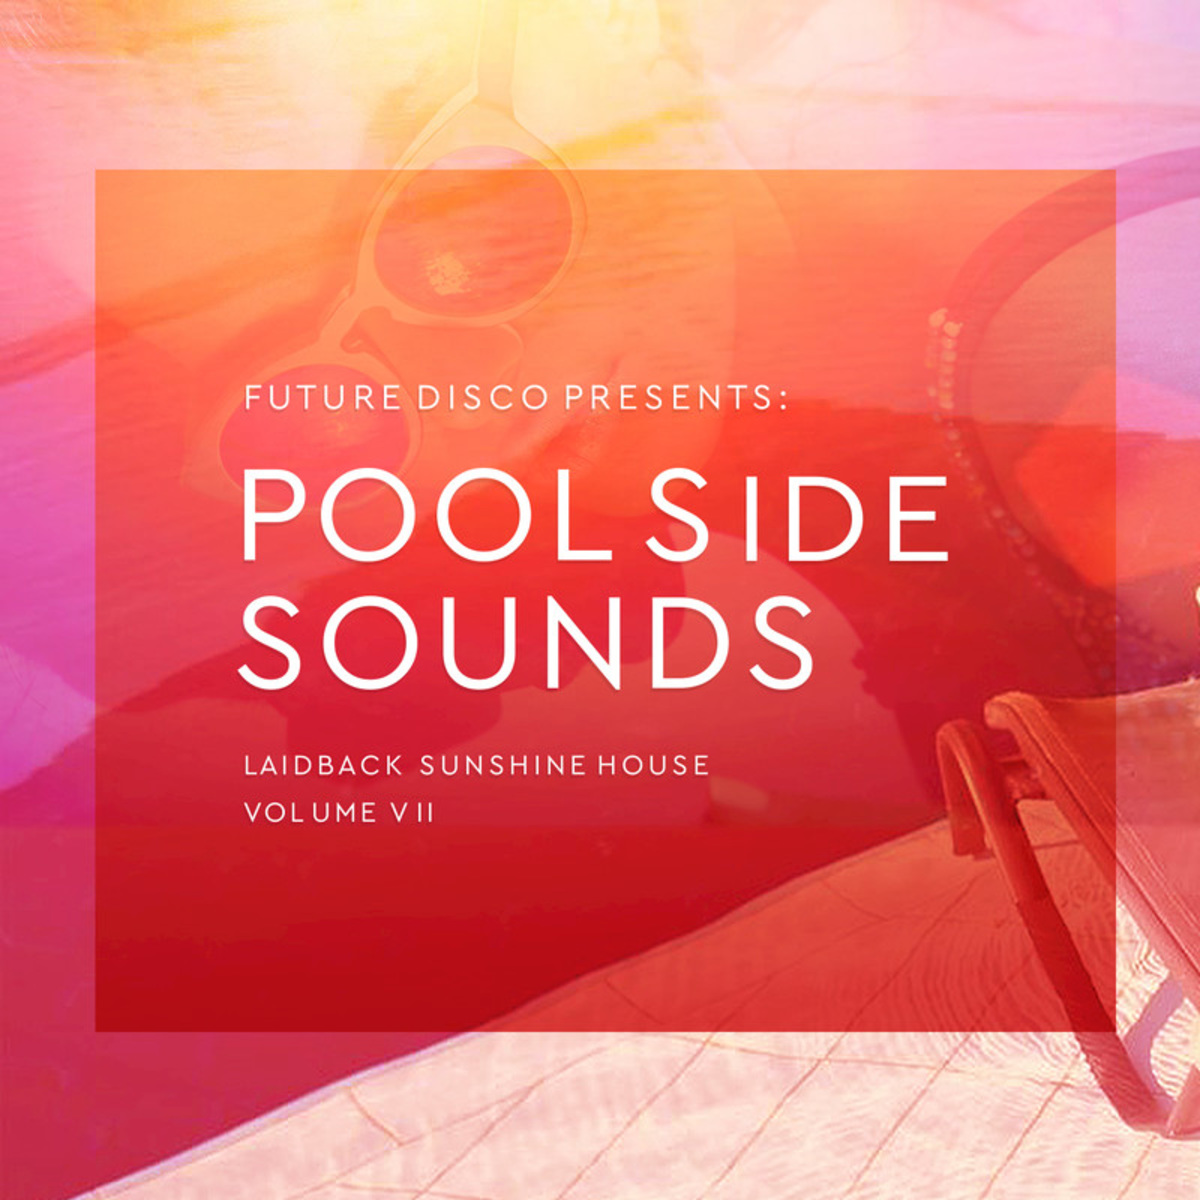 VA - Future Disco Presents: Poolside Sounds, Vol. 7 / Future Disco